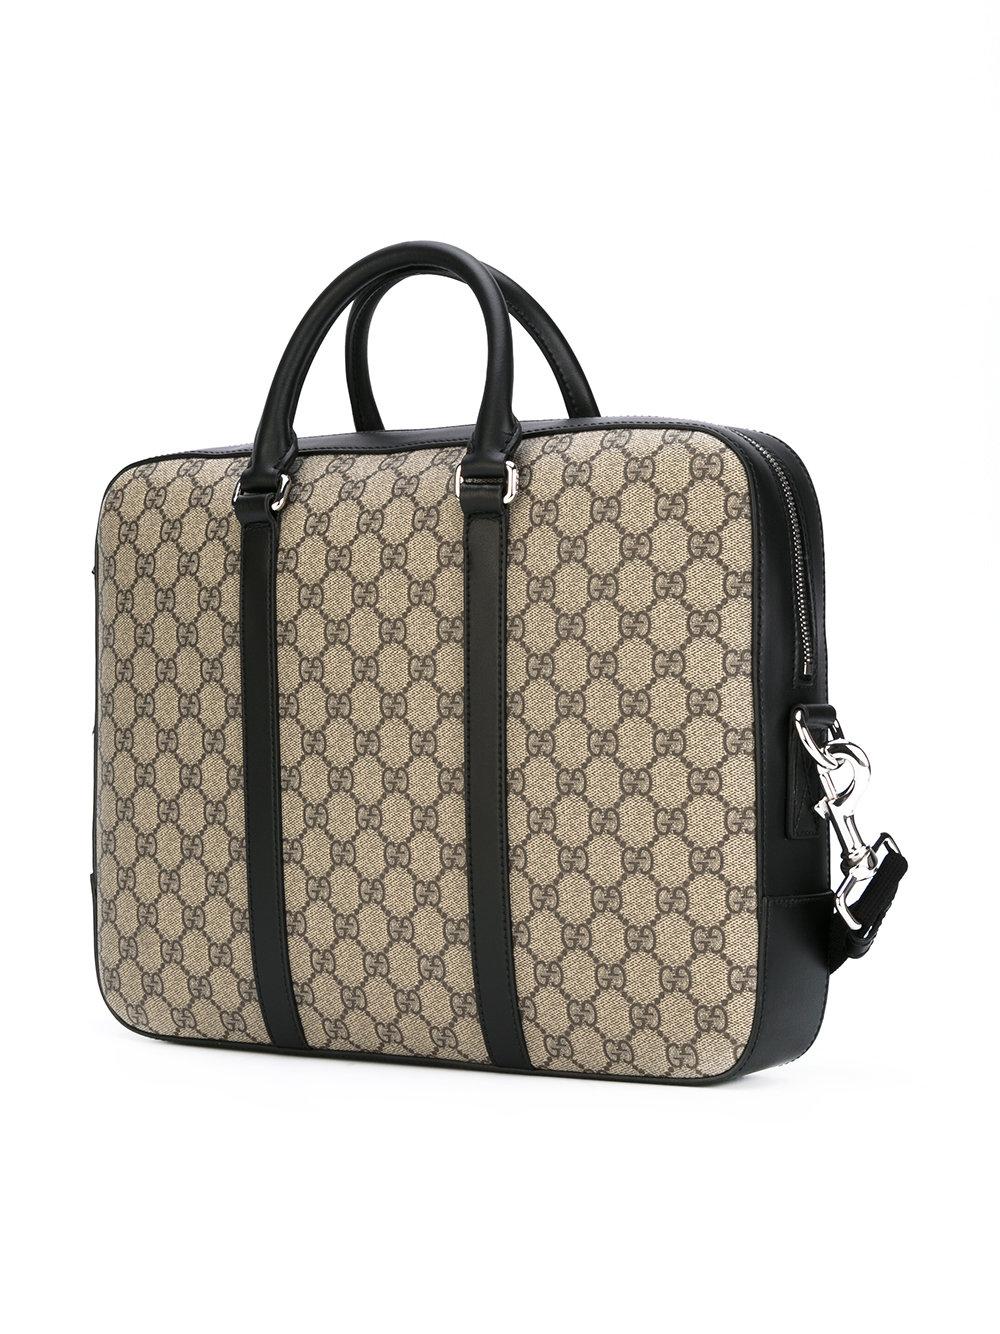 Gucci Gg Supreme Laptop Bag in Black | Lyst